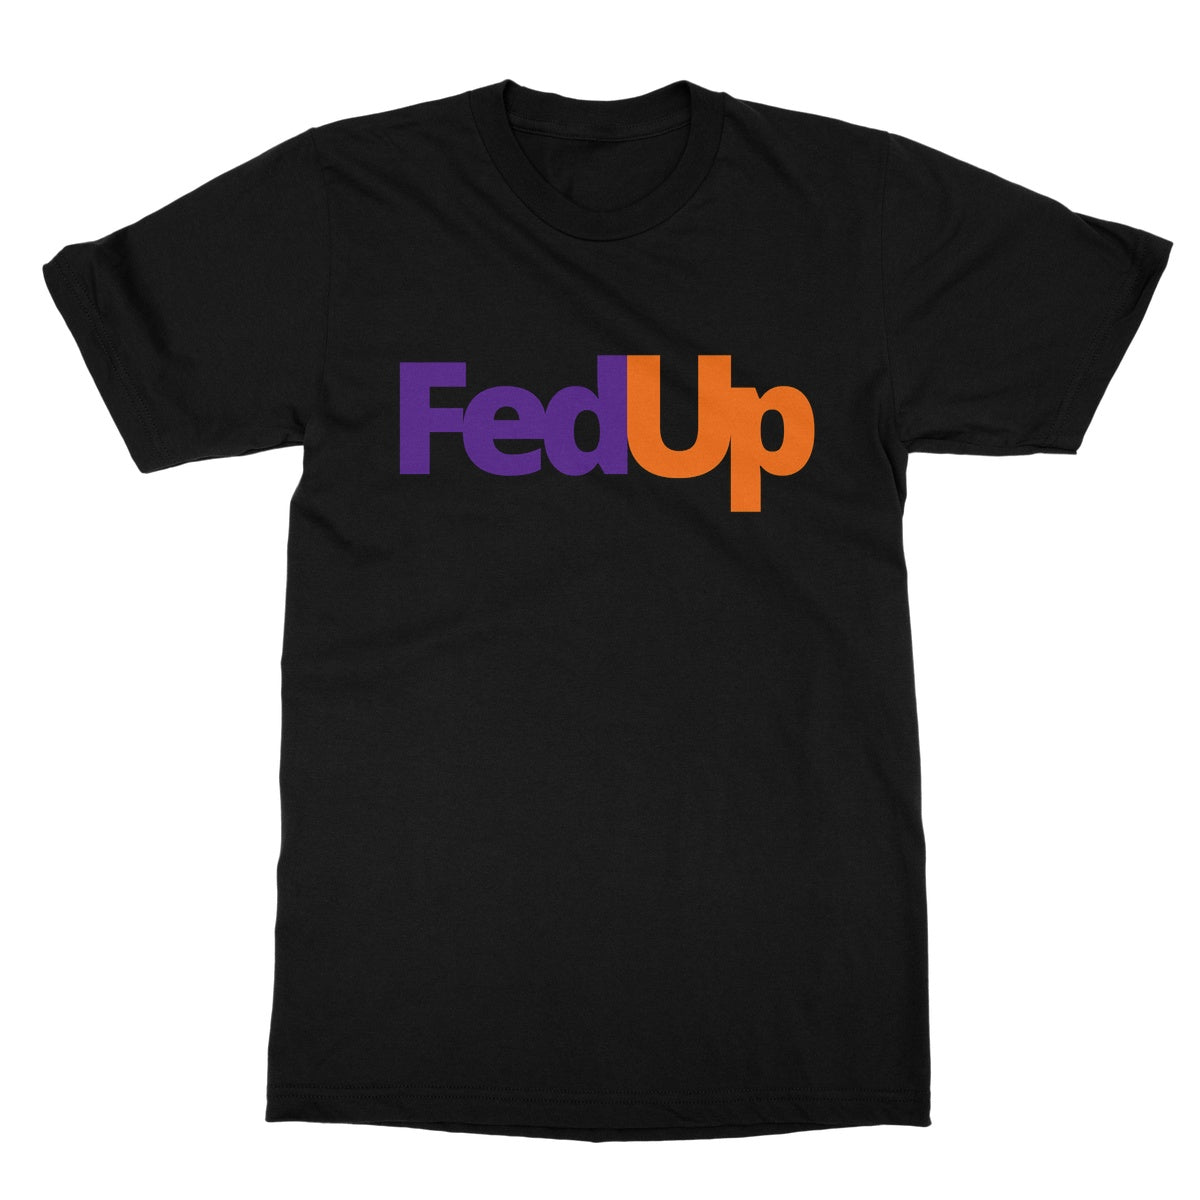 fedup t shirt black